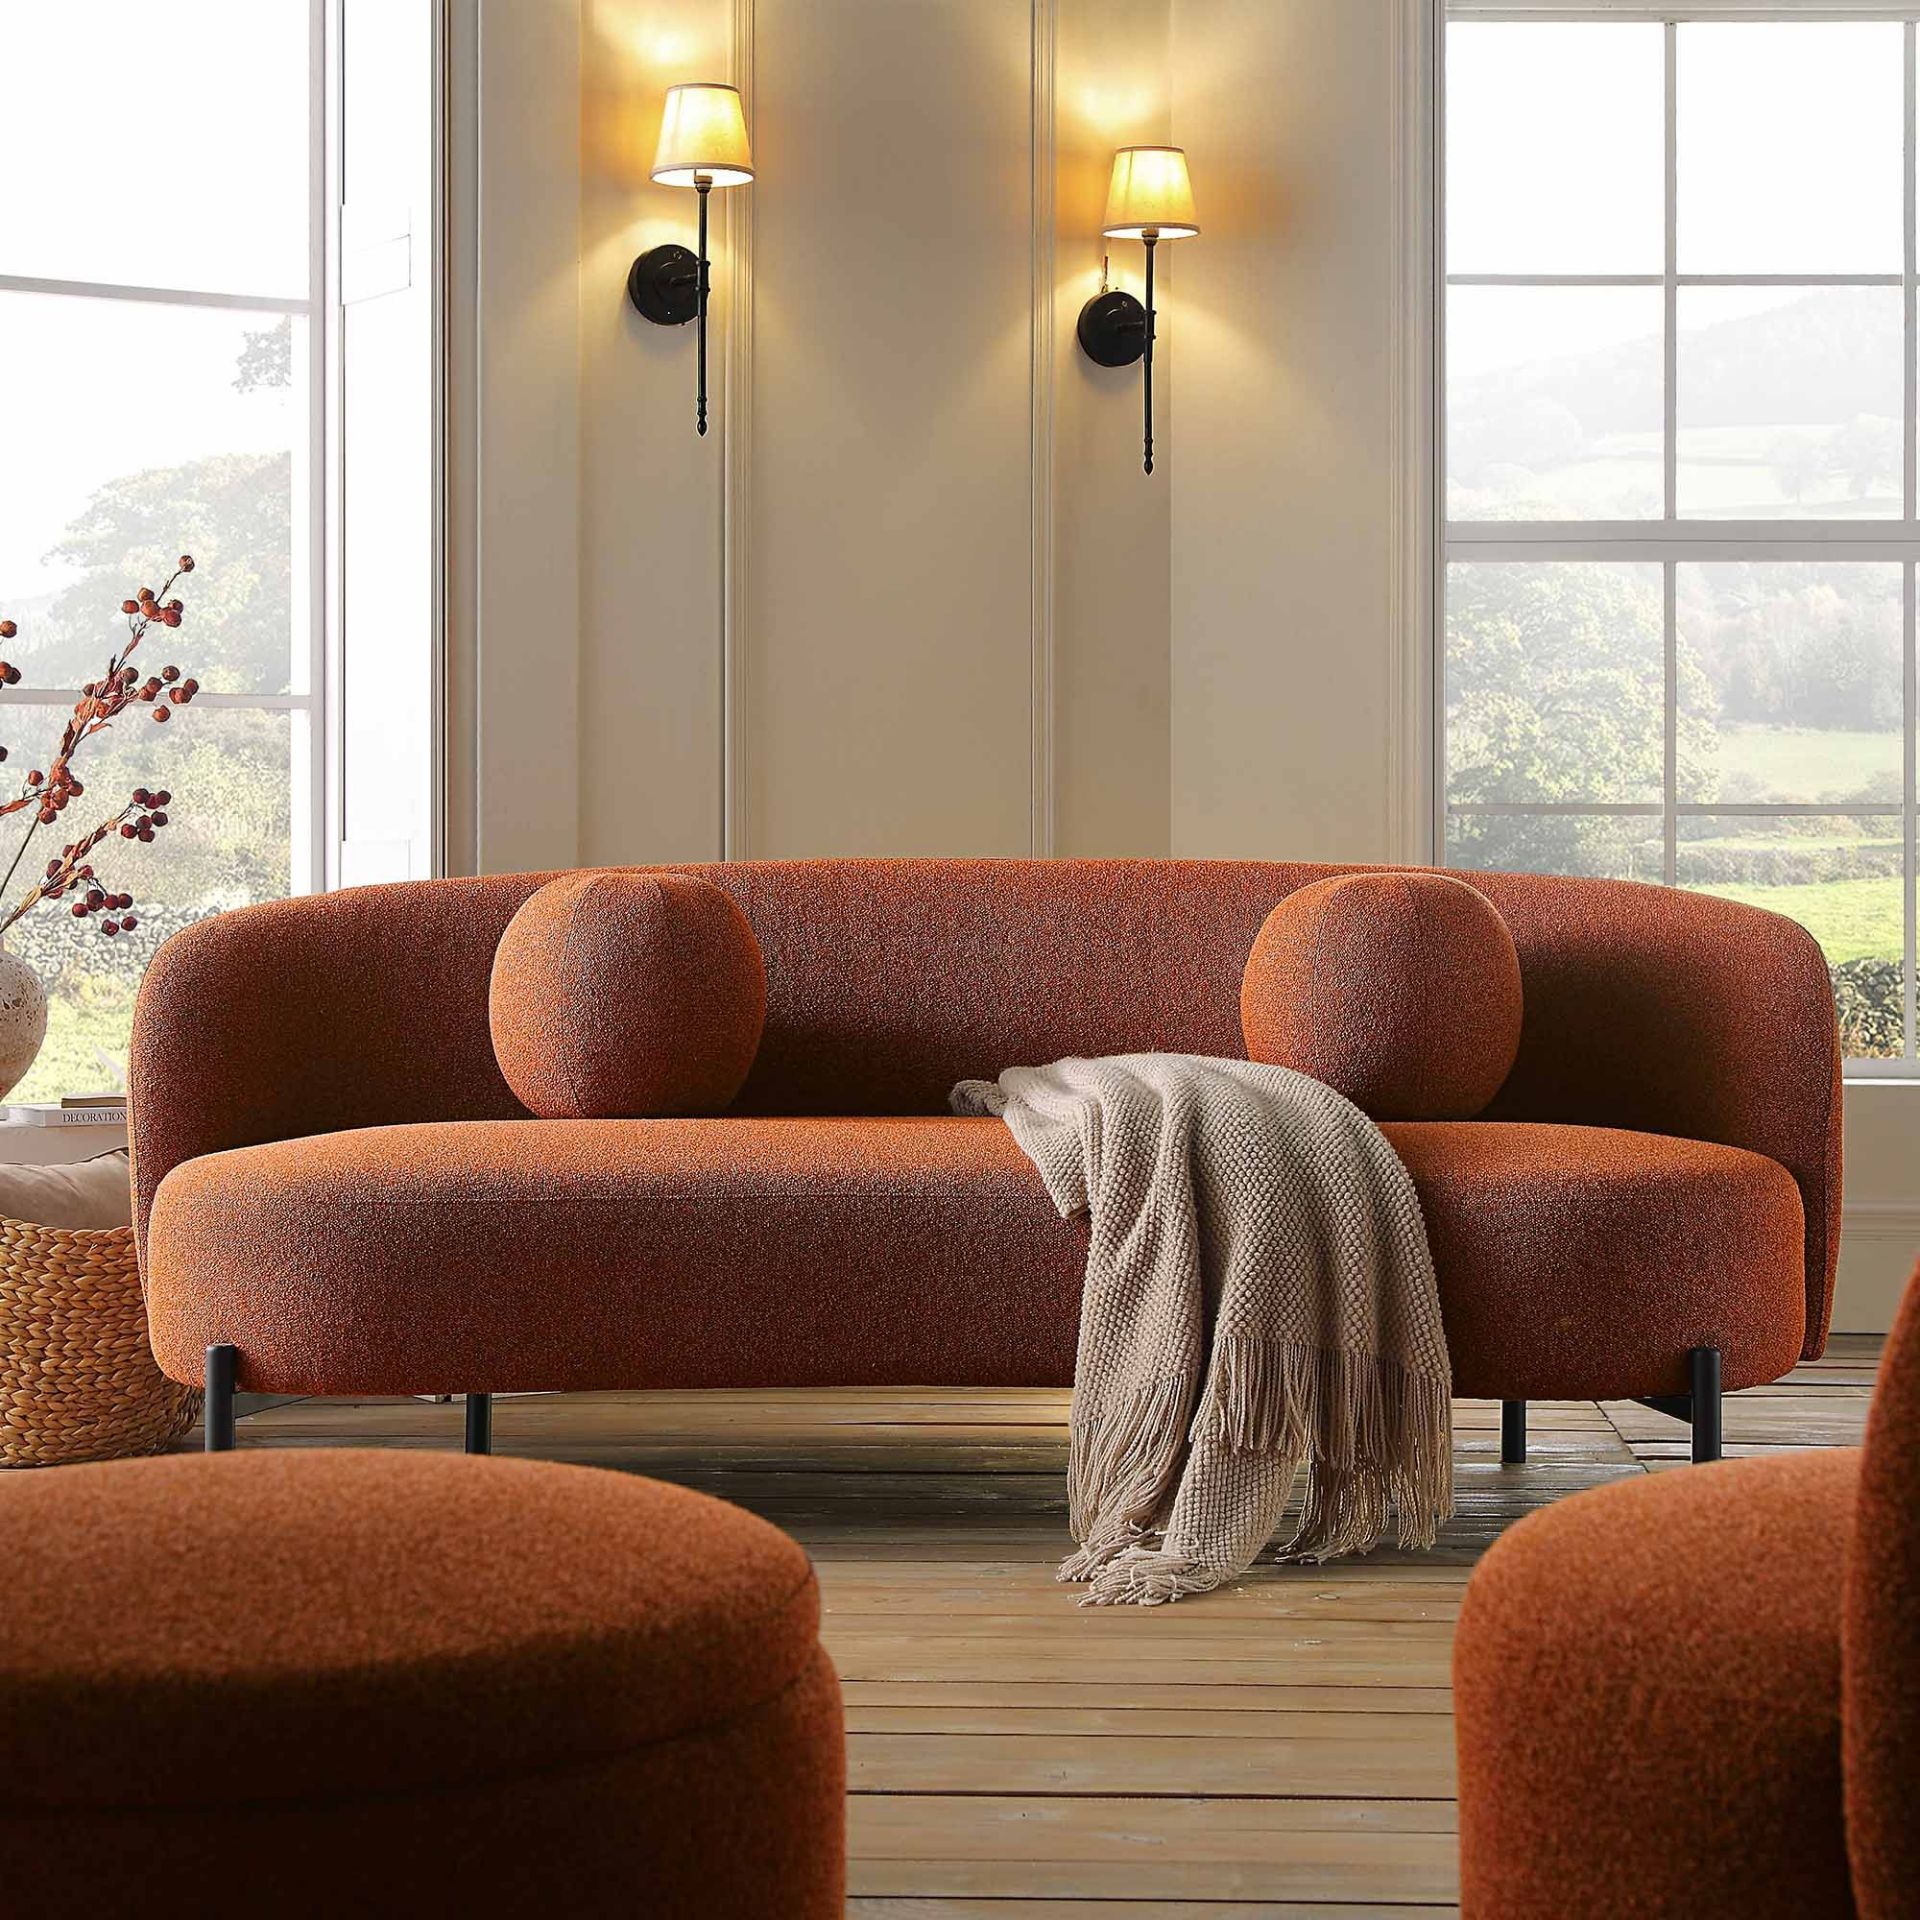 Amboise 3-Seater Curved Sofa, Brick Boucle. -ER23. RRP £699.99. The Amboise sofa embraces curvy